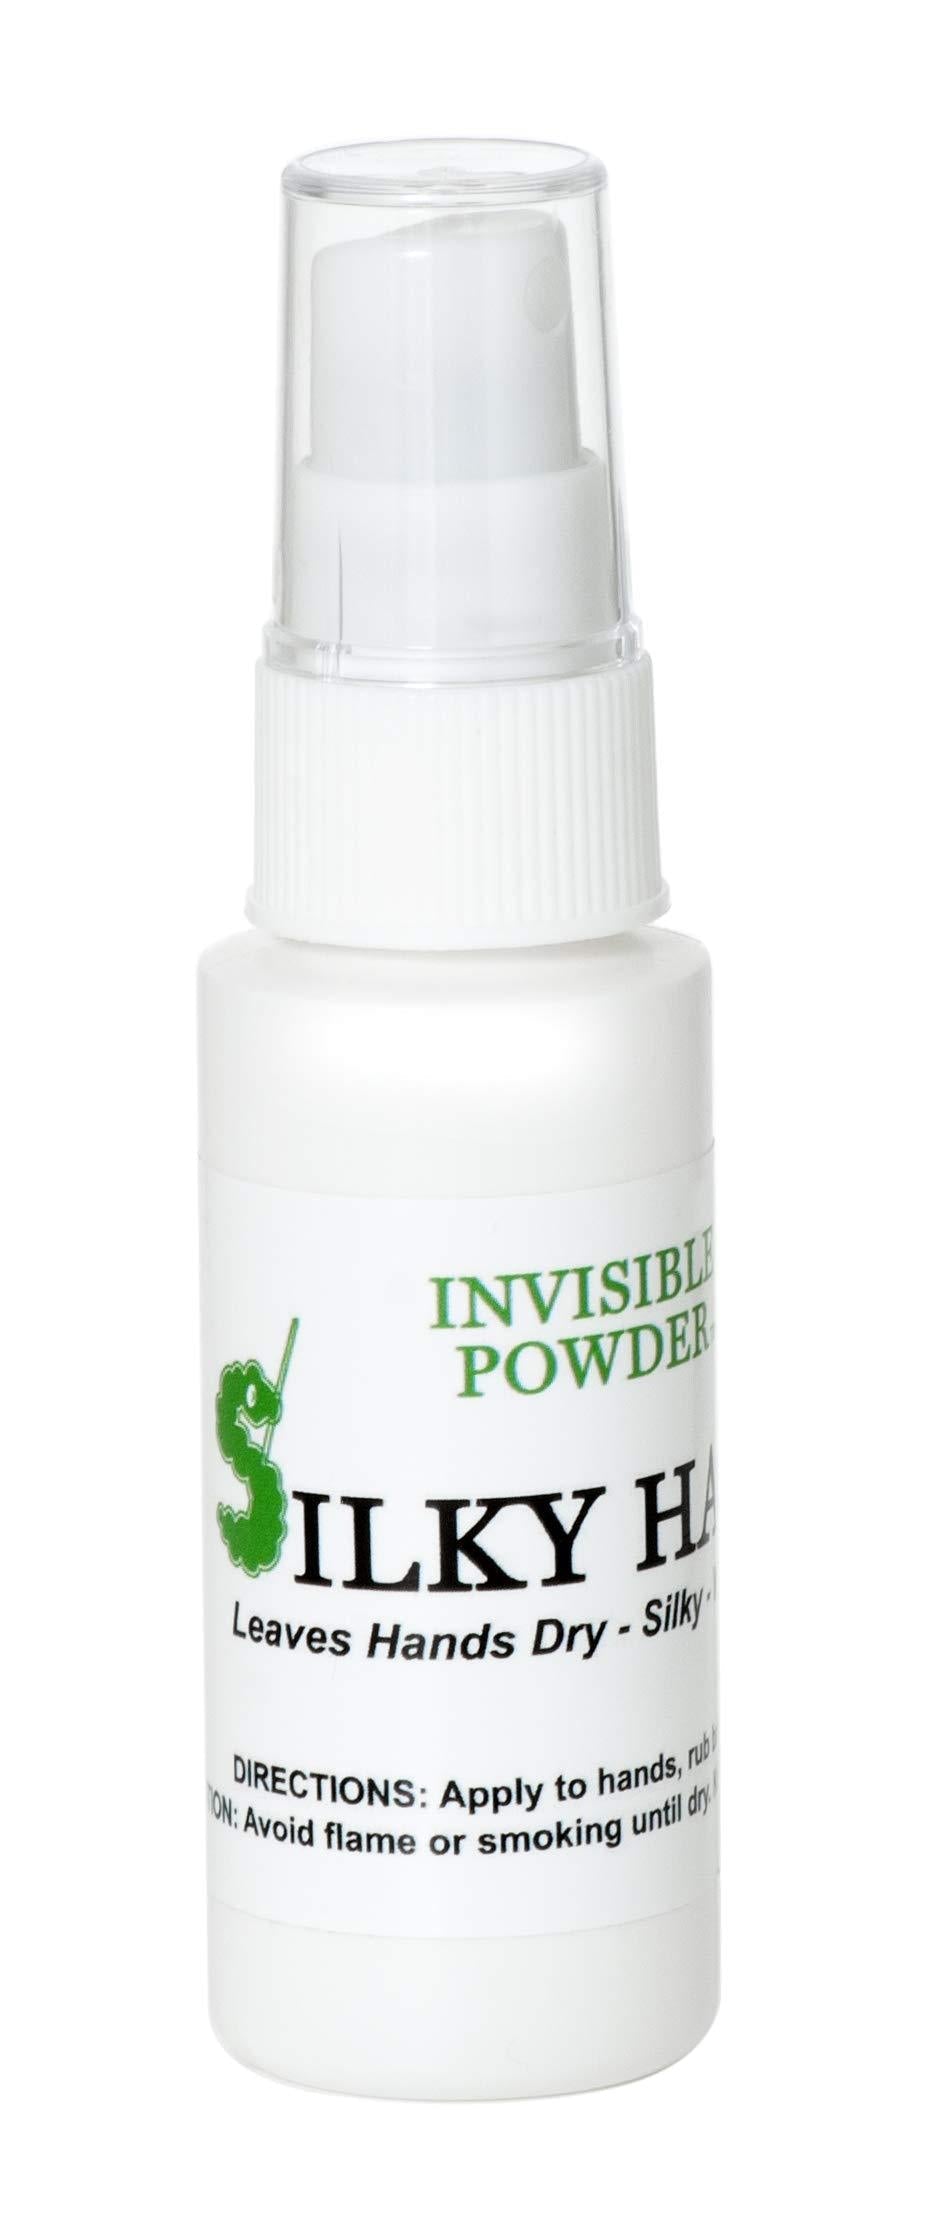 [AUSTRALIA] - Silky Hand Invisible Powder Chalkless Hand Conditioner 2 oz Bottle 